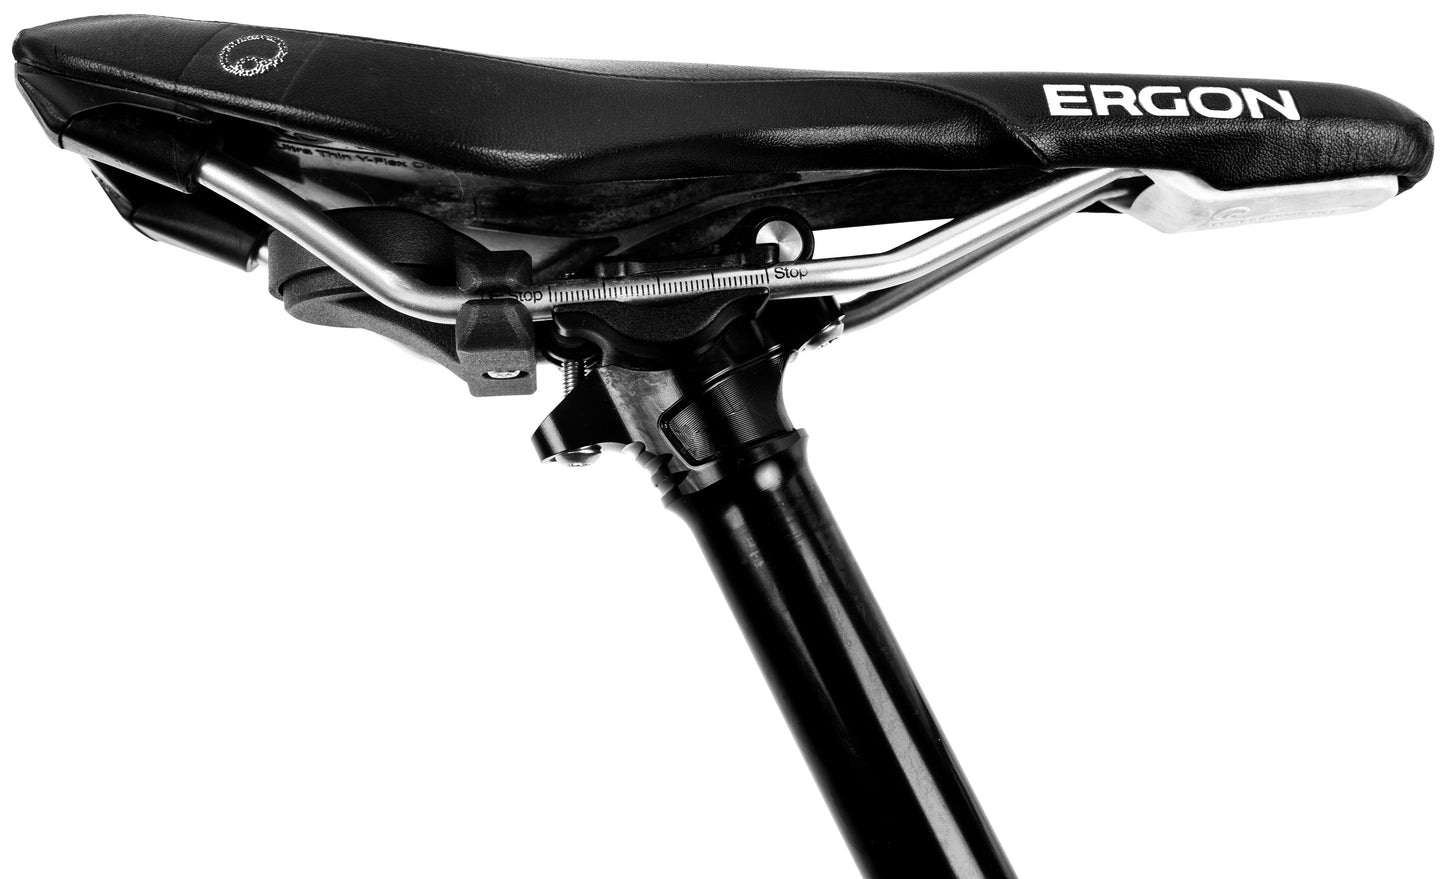 bikeTag saddle : Airtag mount for bike saddle